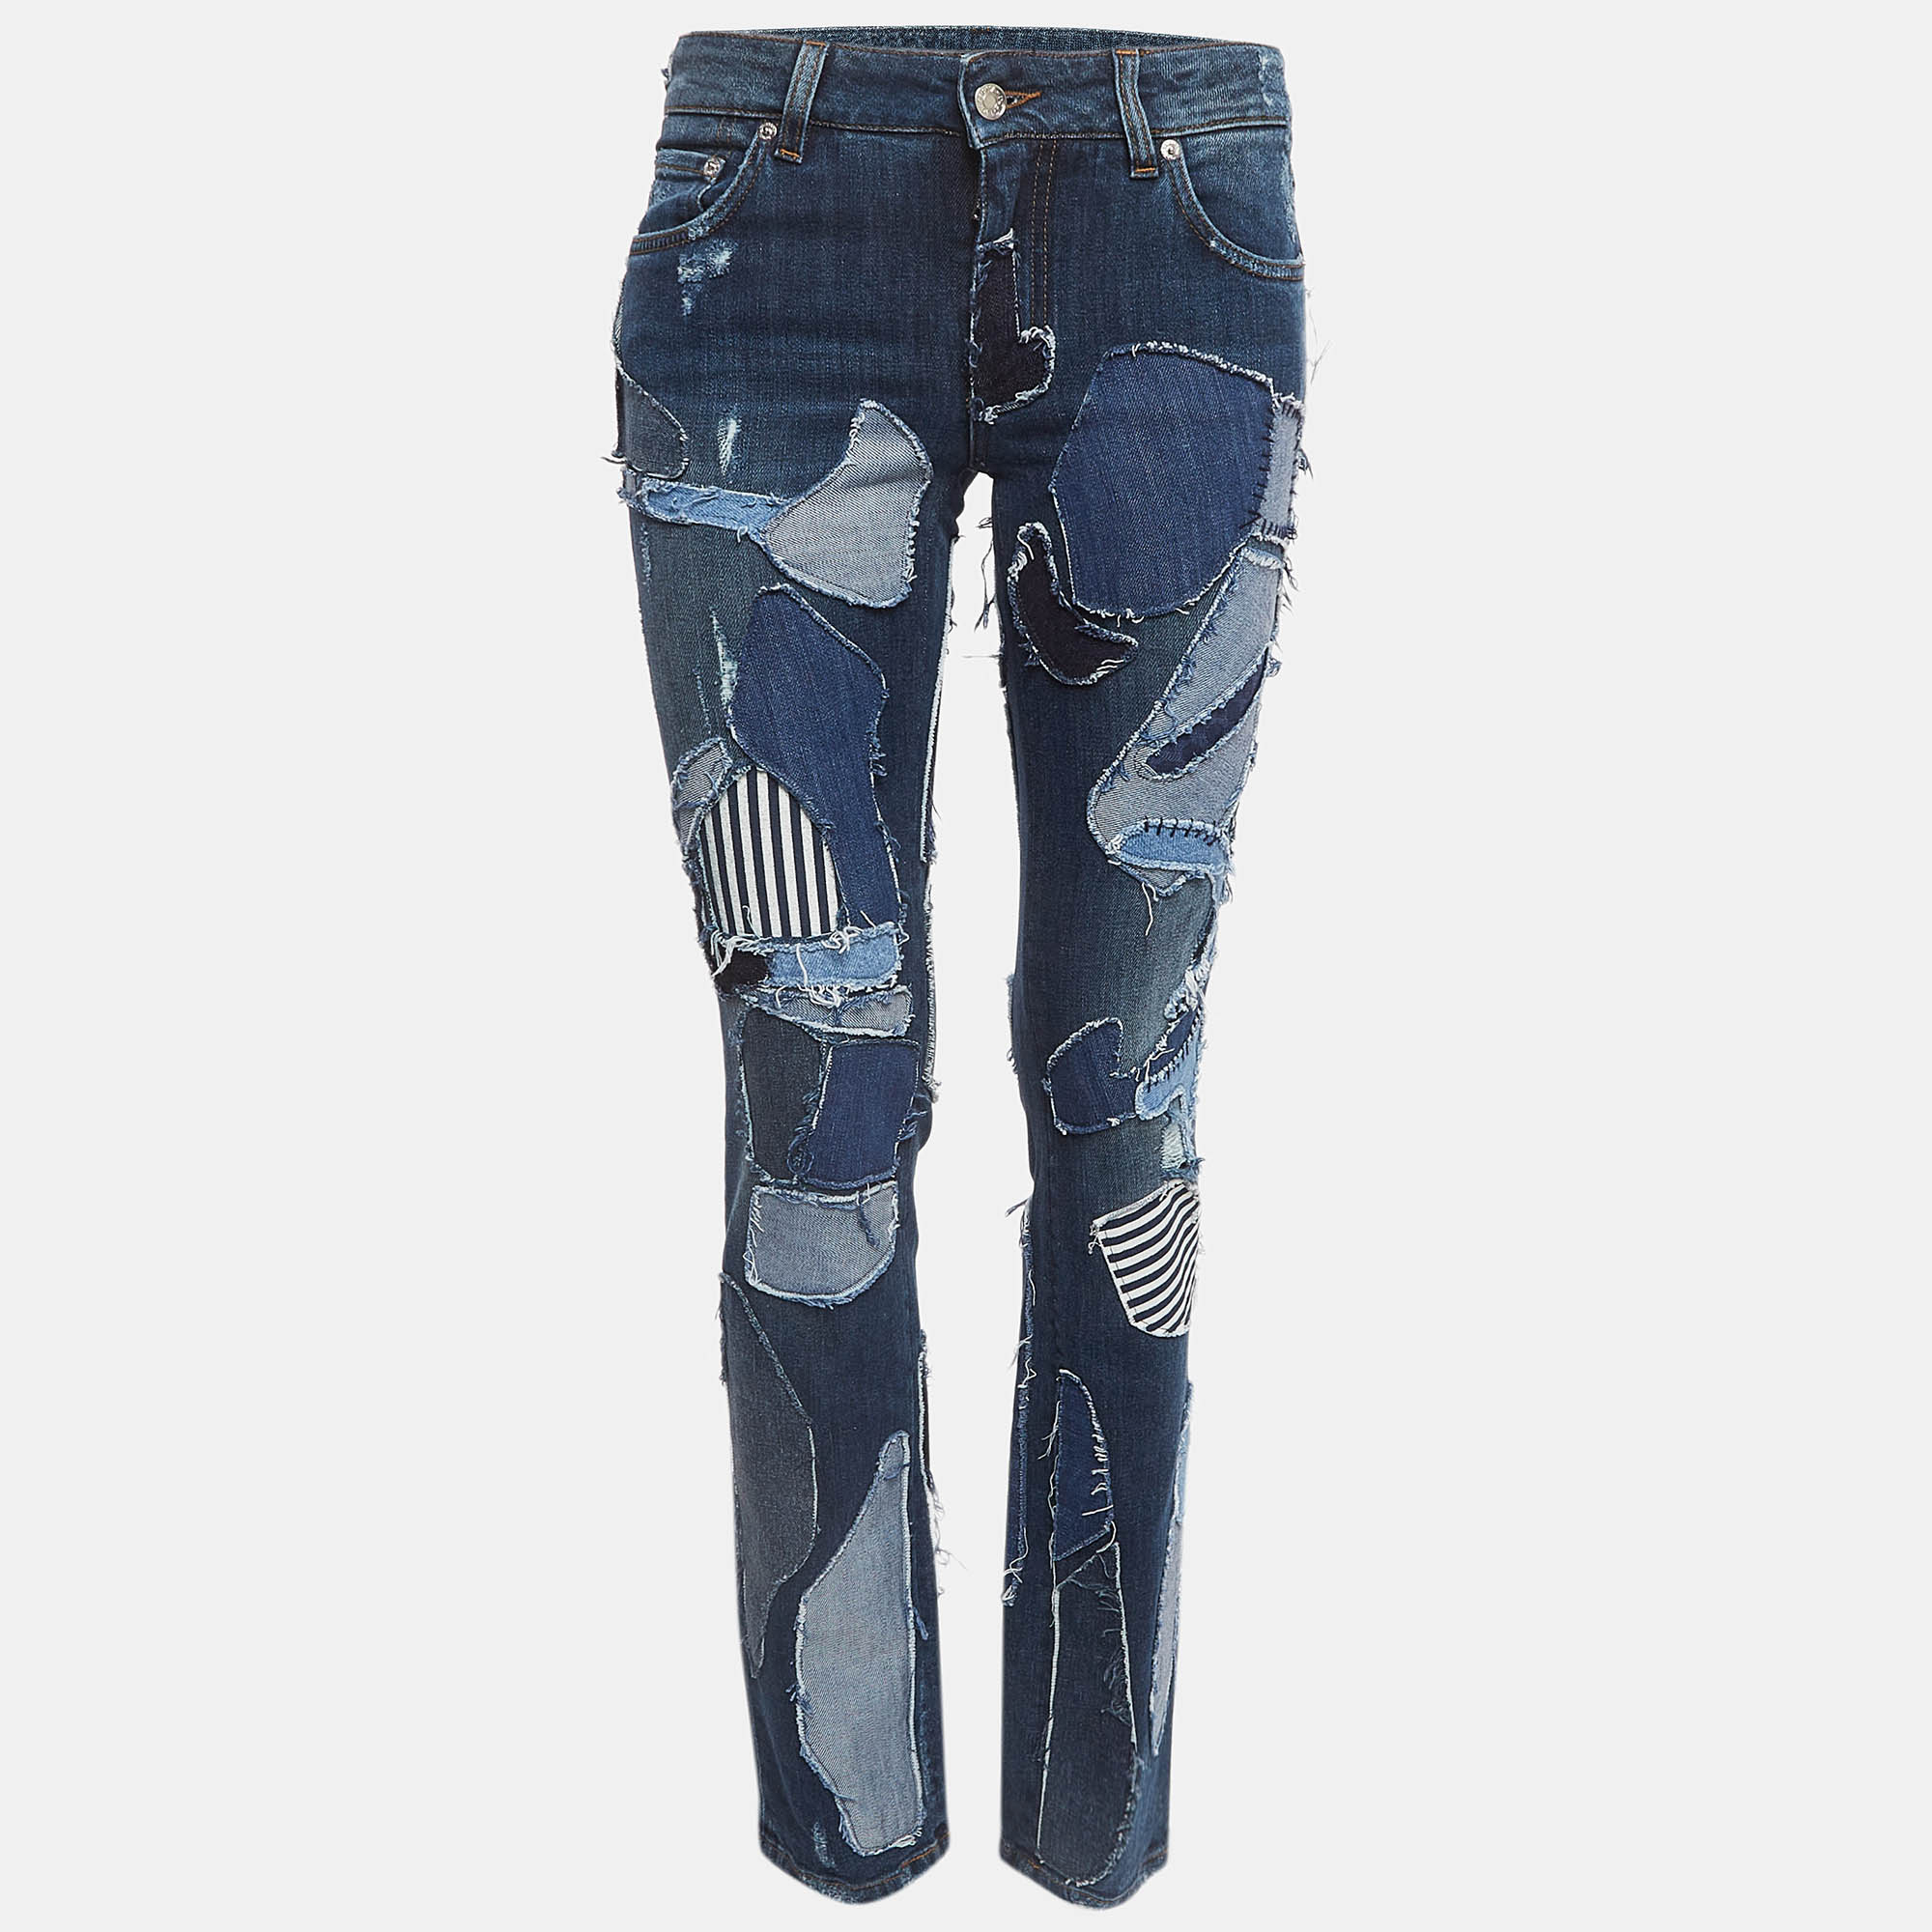 

Dolce & Gabbana Blue Distressed Applique Denim Jeans S Waist 28"